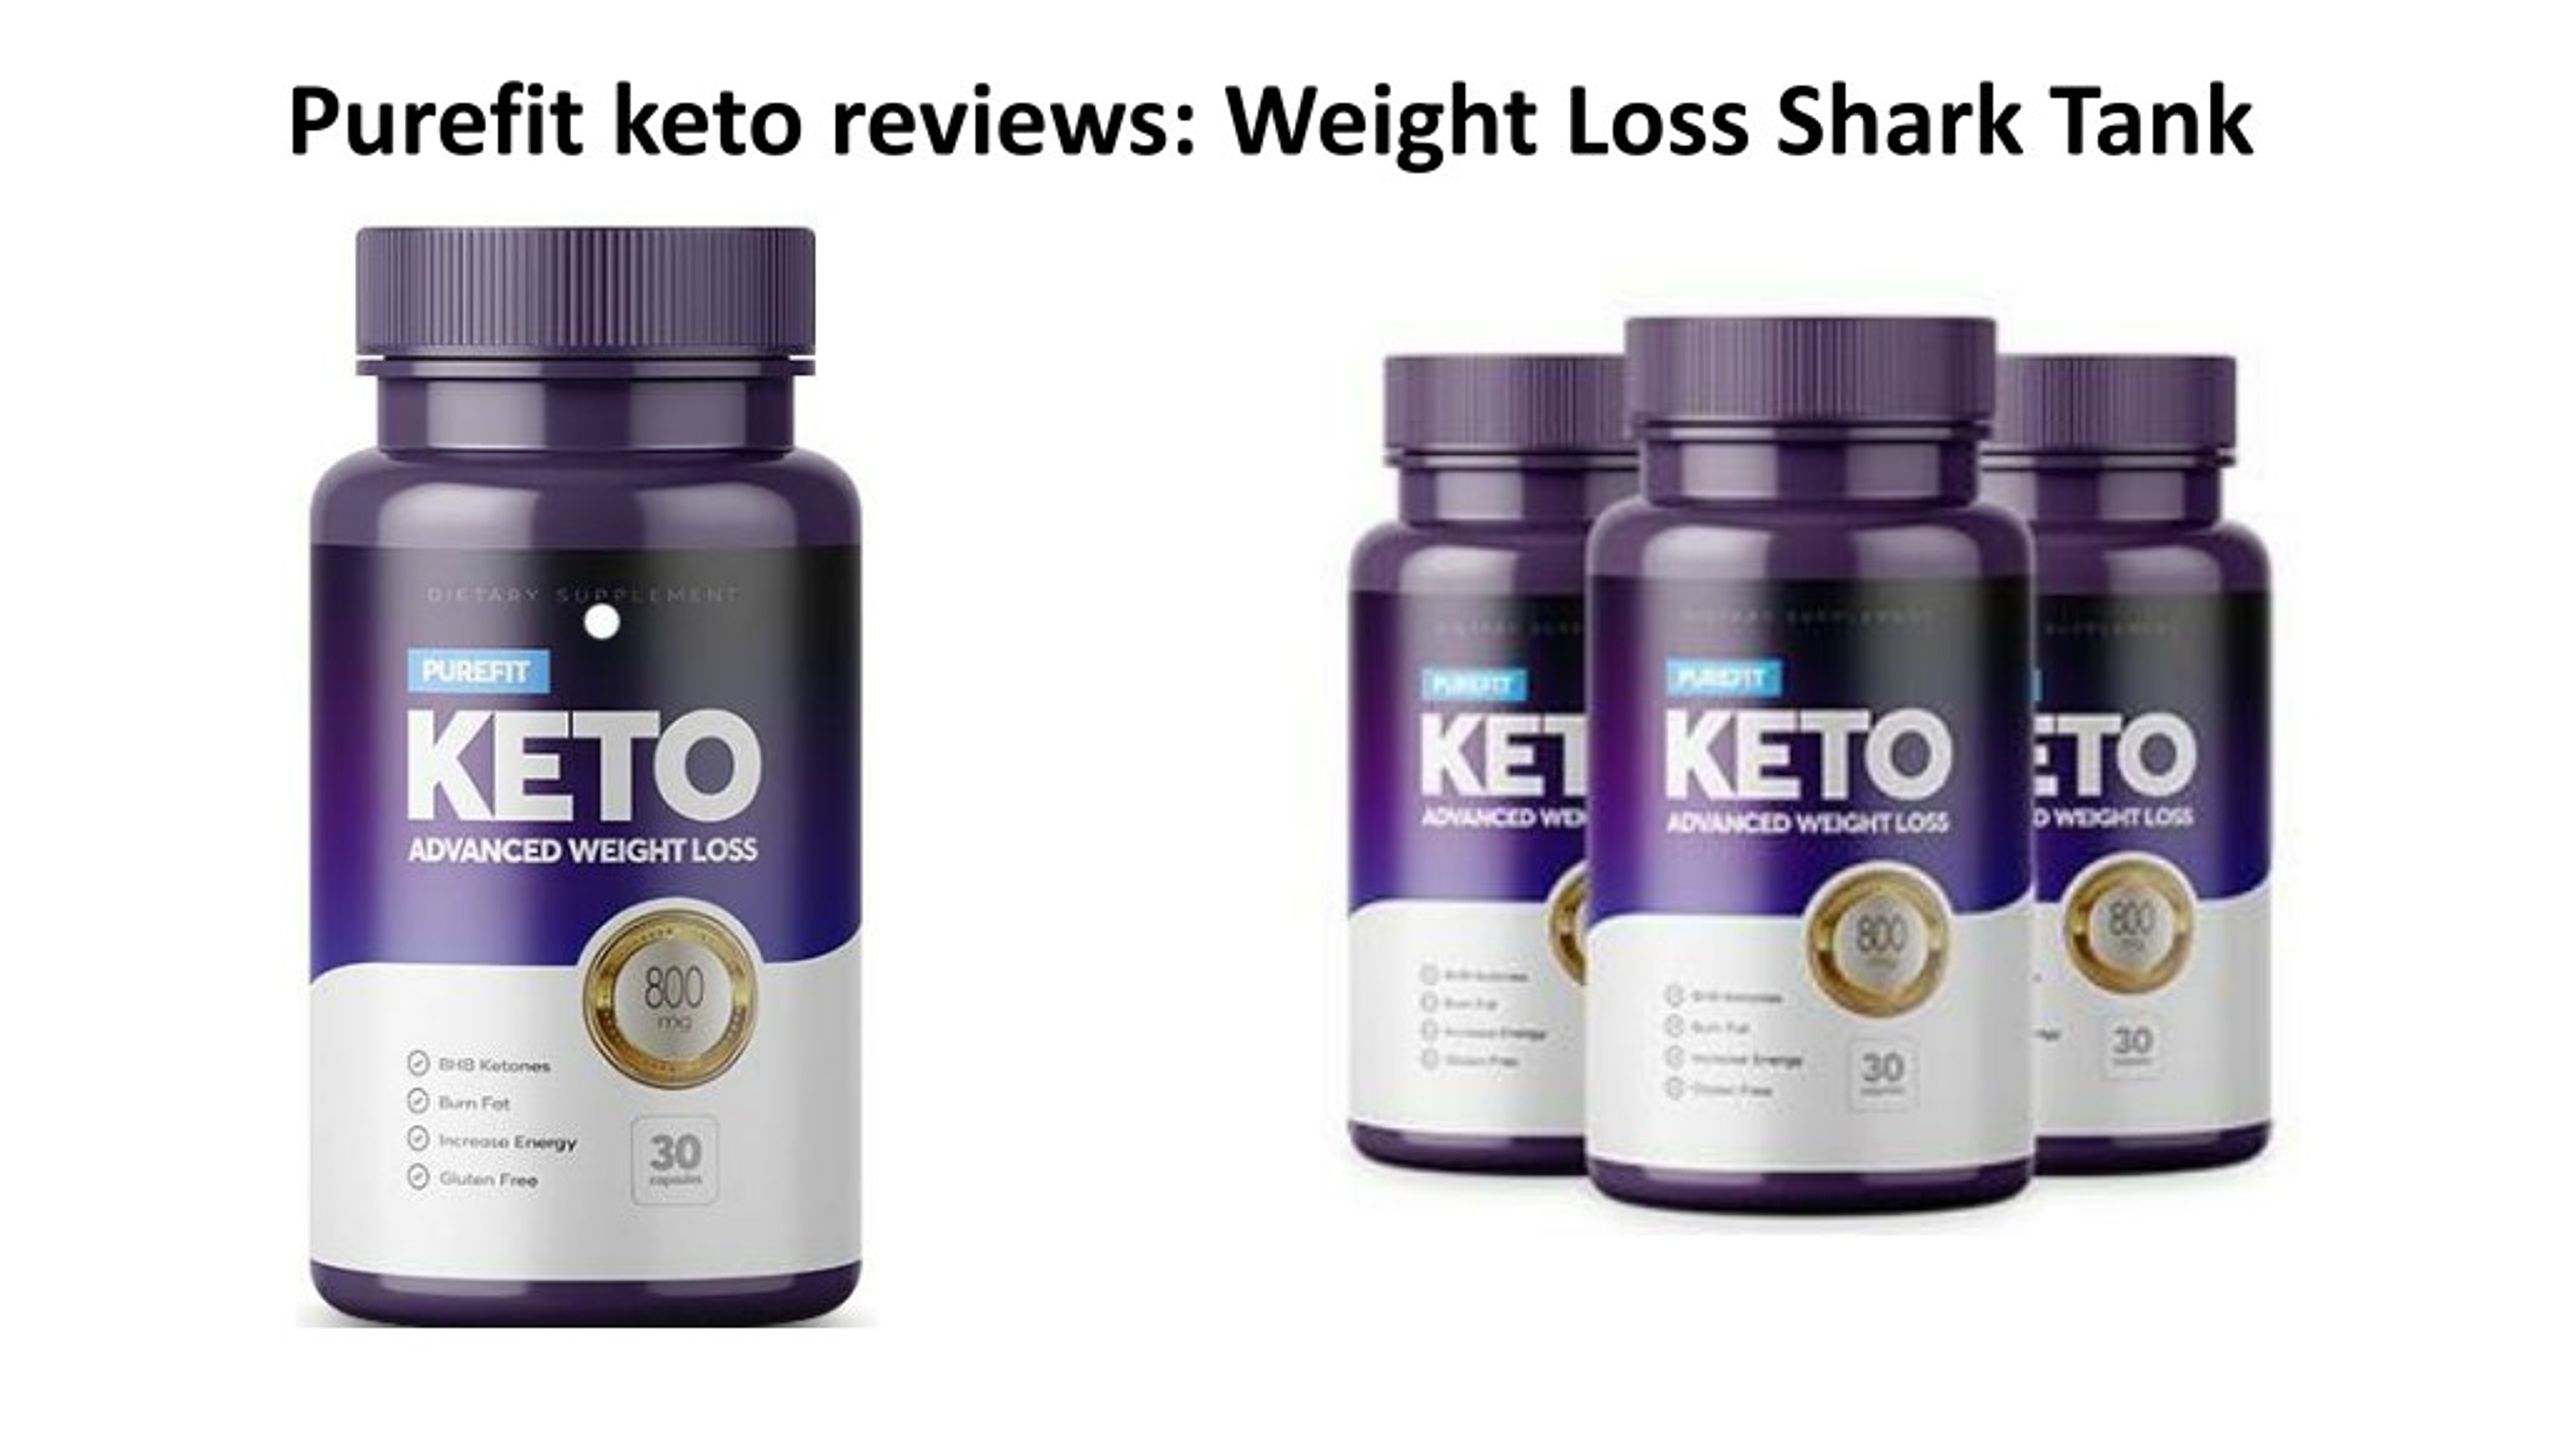 Ppt Purefit Keto Reviews Weight Loss Shark Tank Powerpoint Presentation Id 8011446